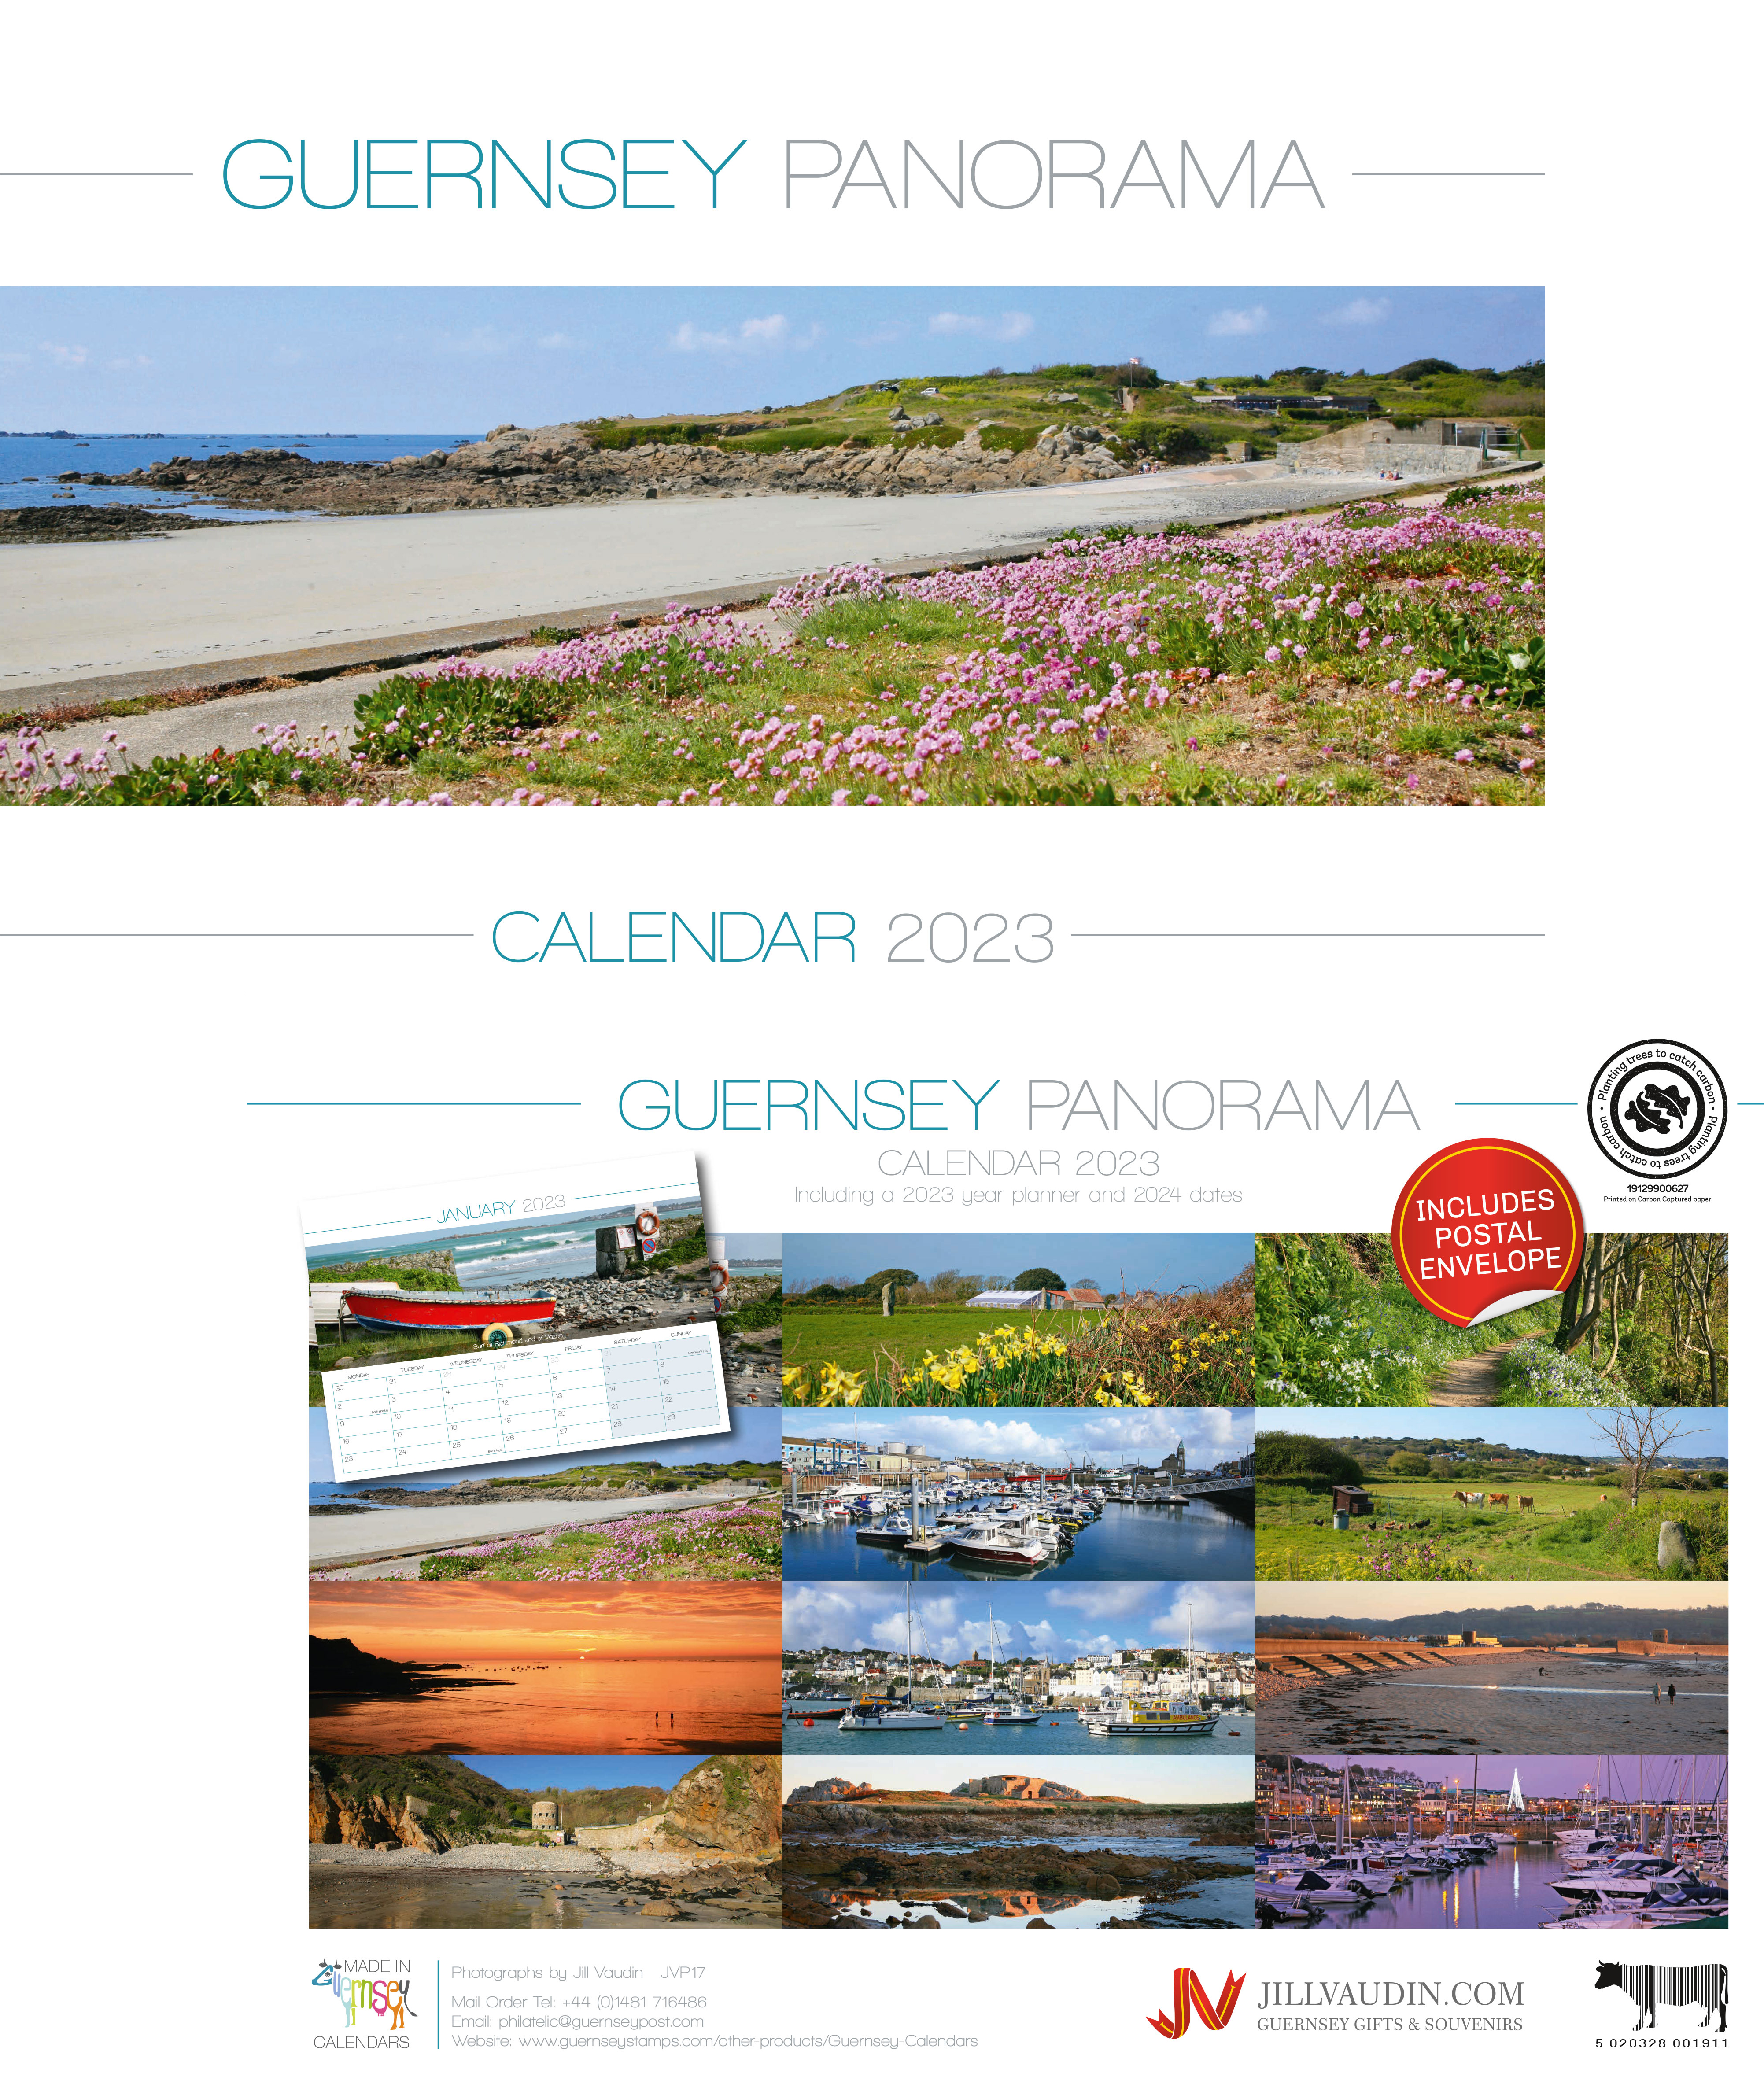 Guernsey Panorama Calendar 2023